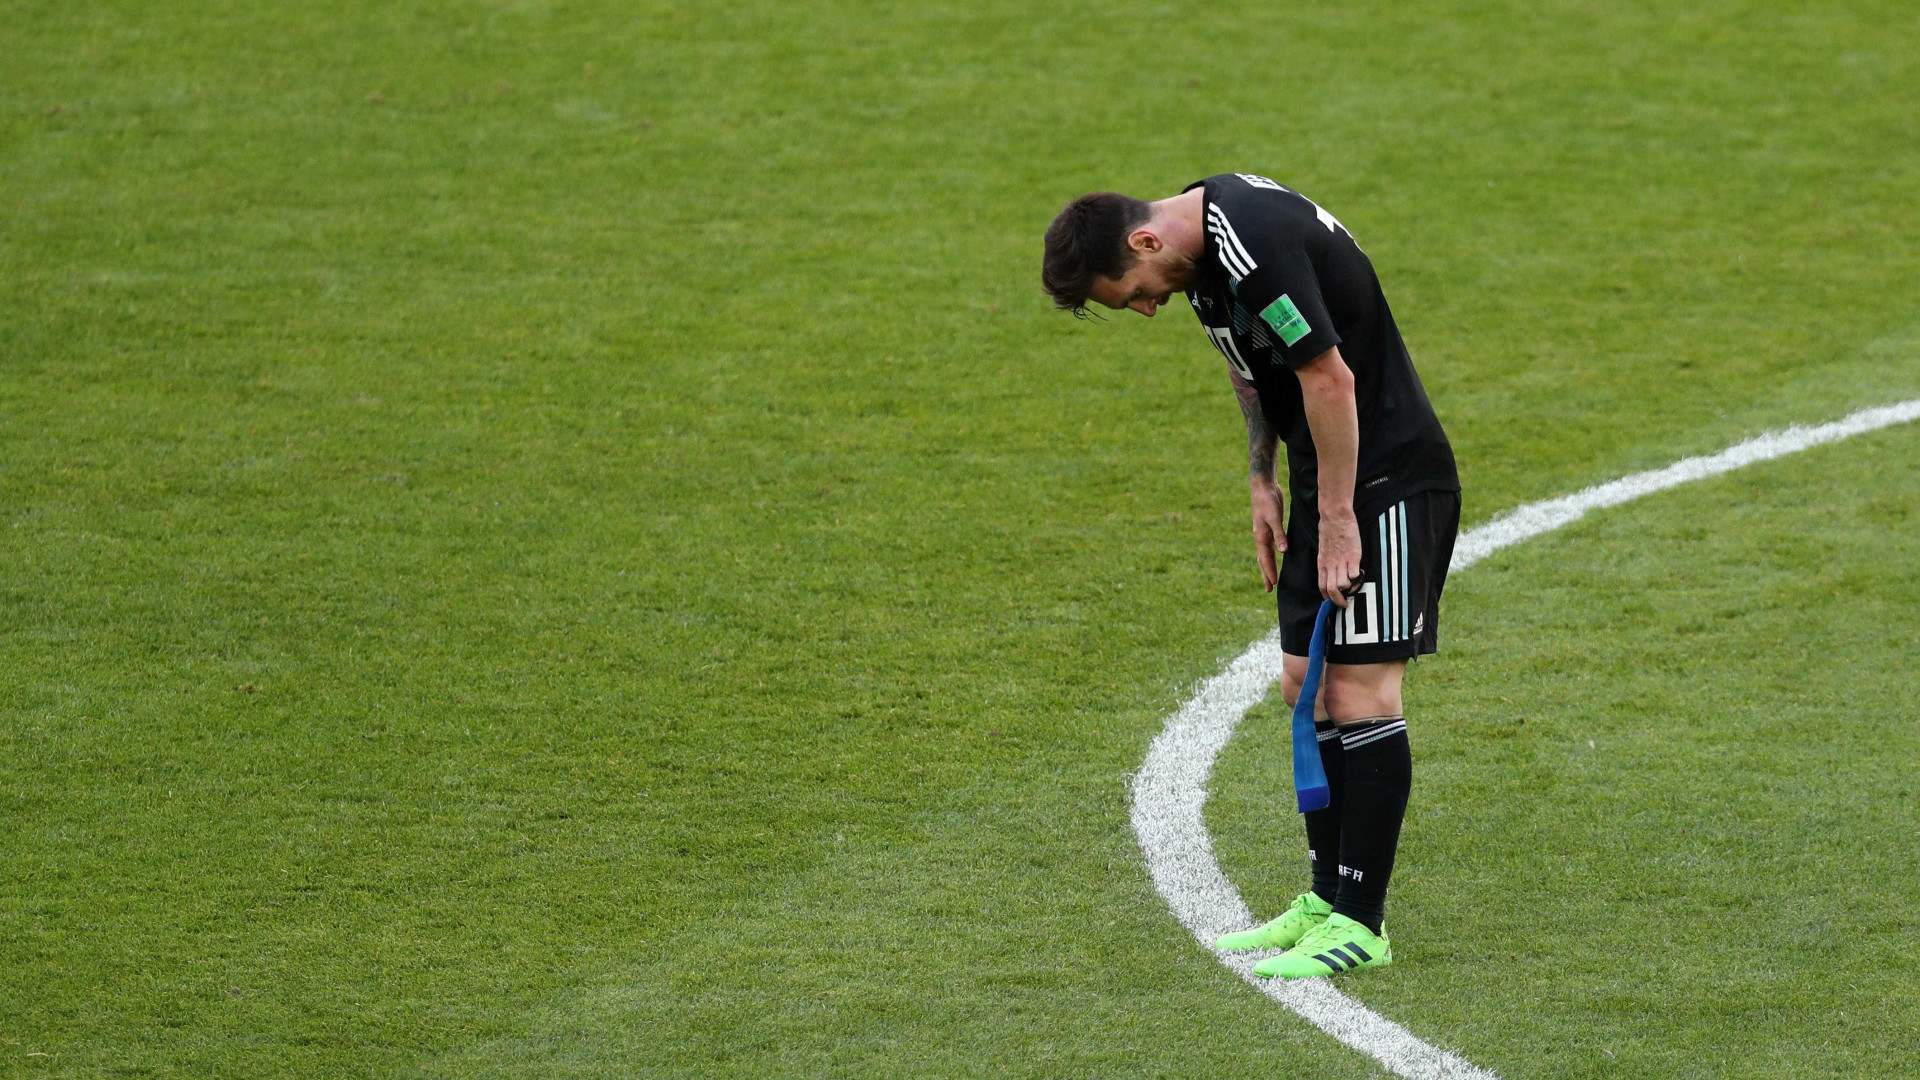 'Me sinto culpado', diz Messi após perder pênalti em empate na Copa